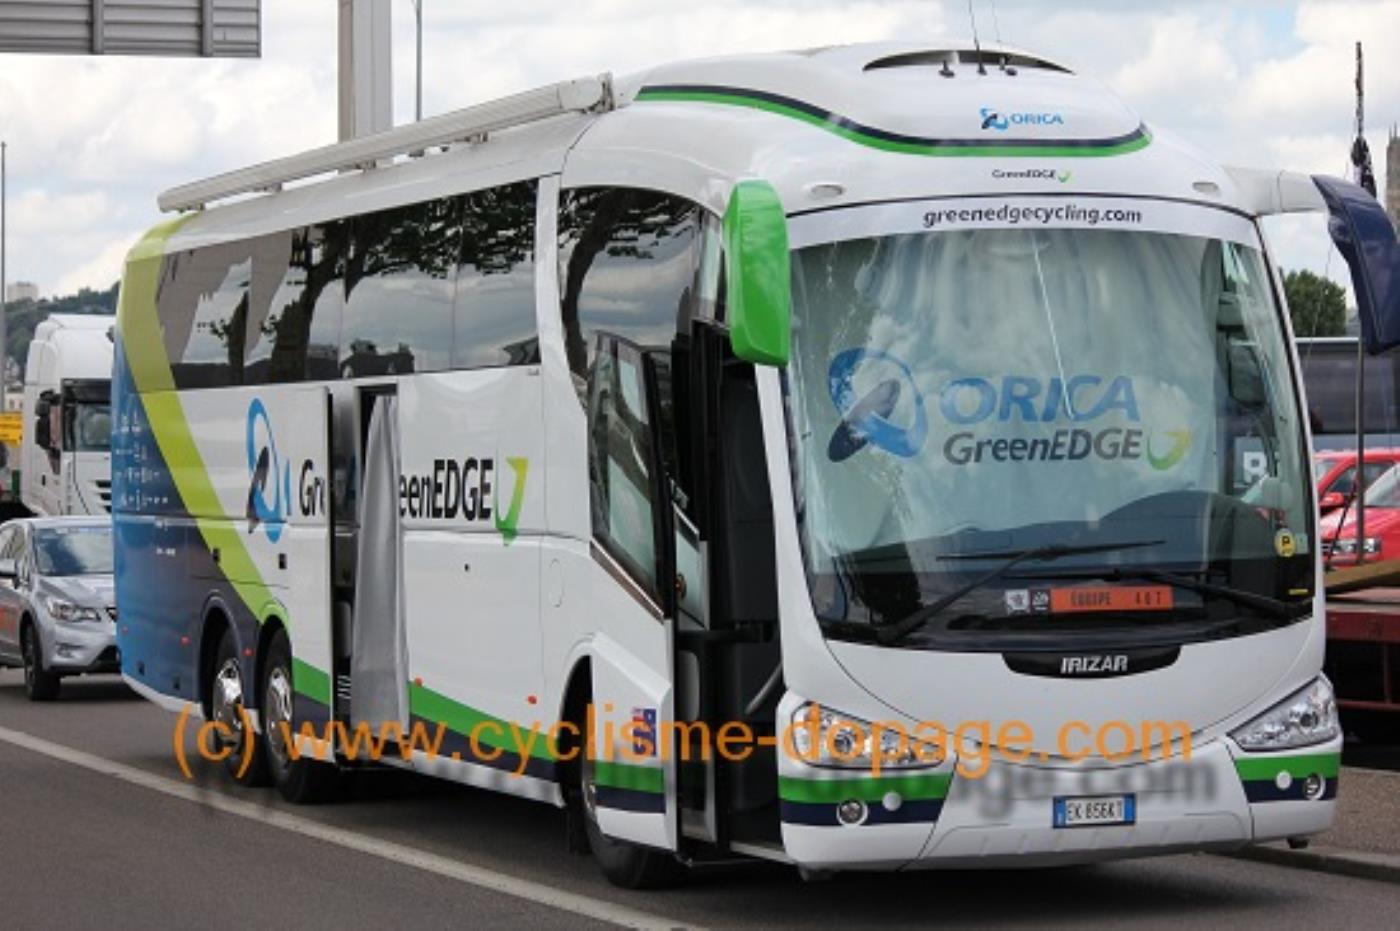 Orica-GreenEdge Bus